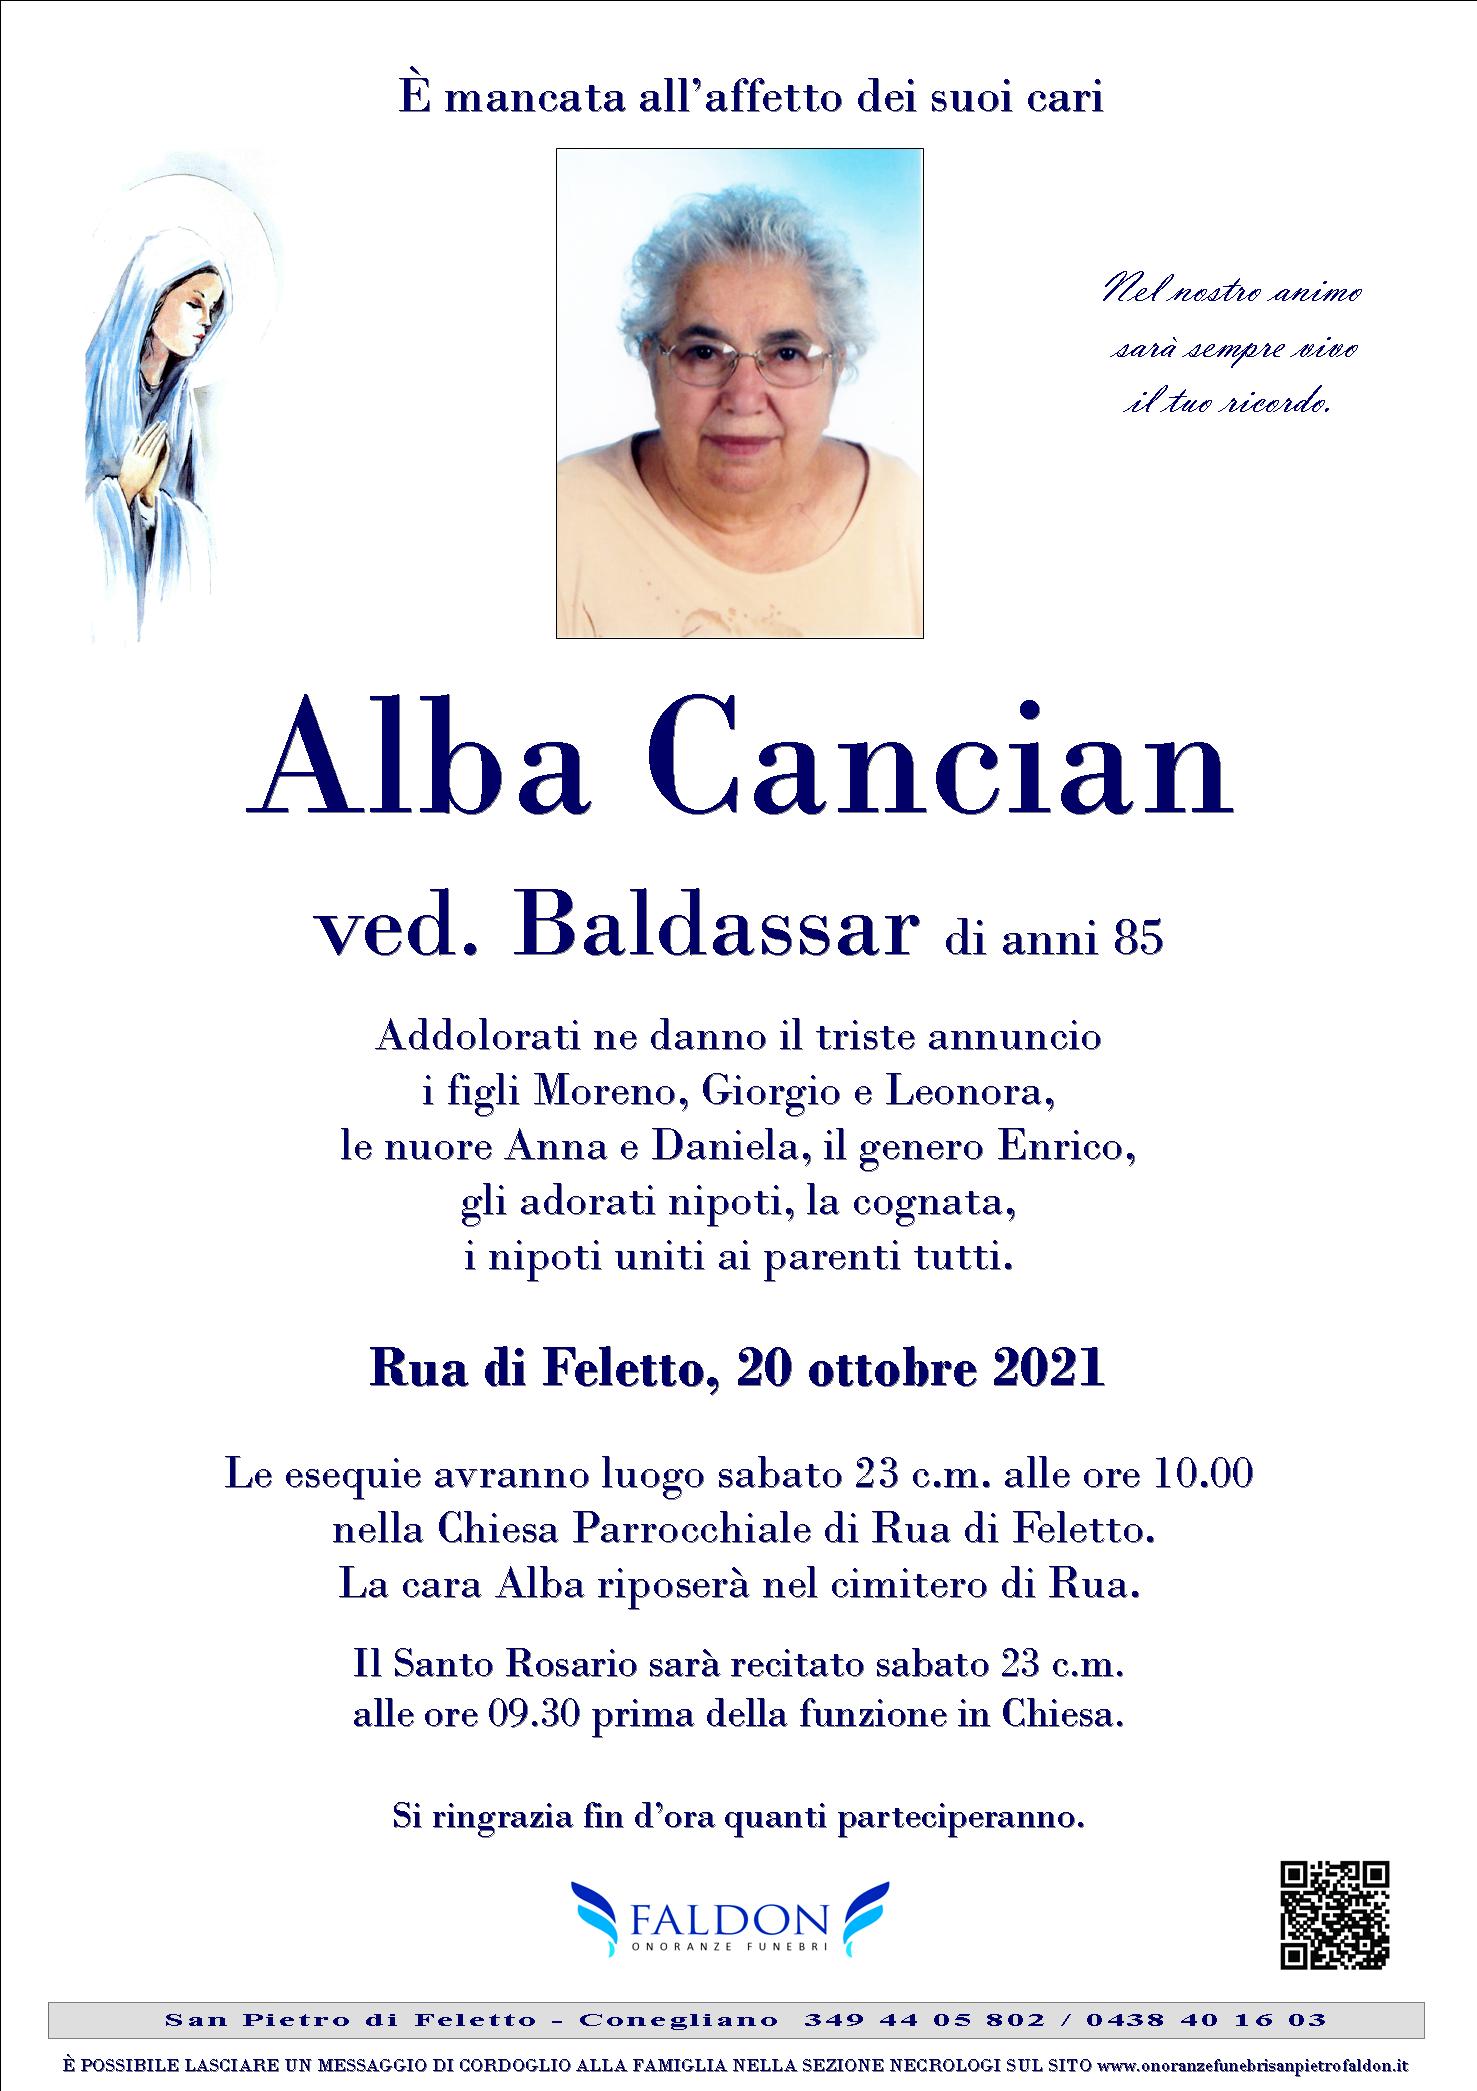 Alba Cancian